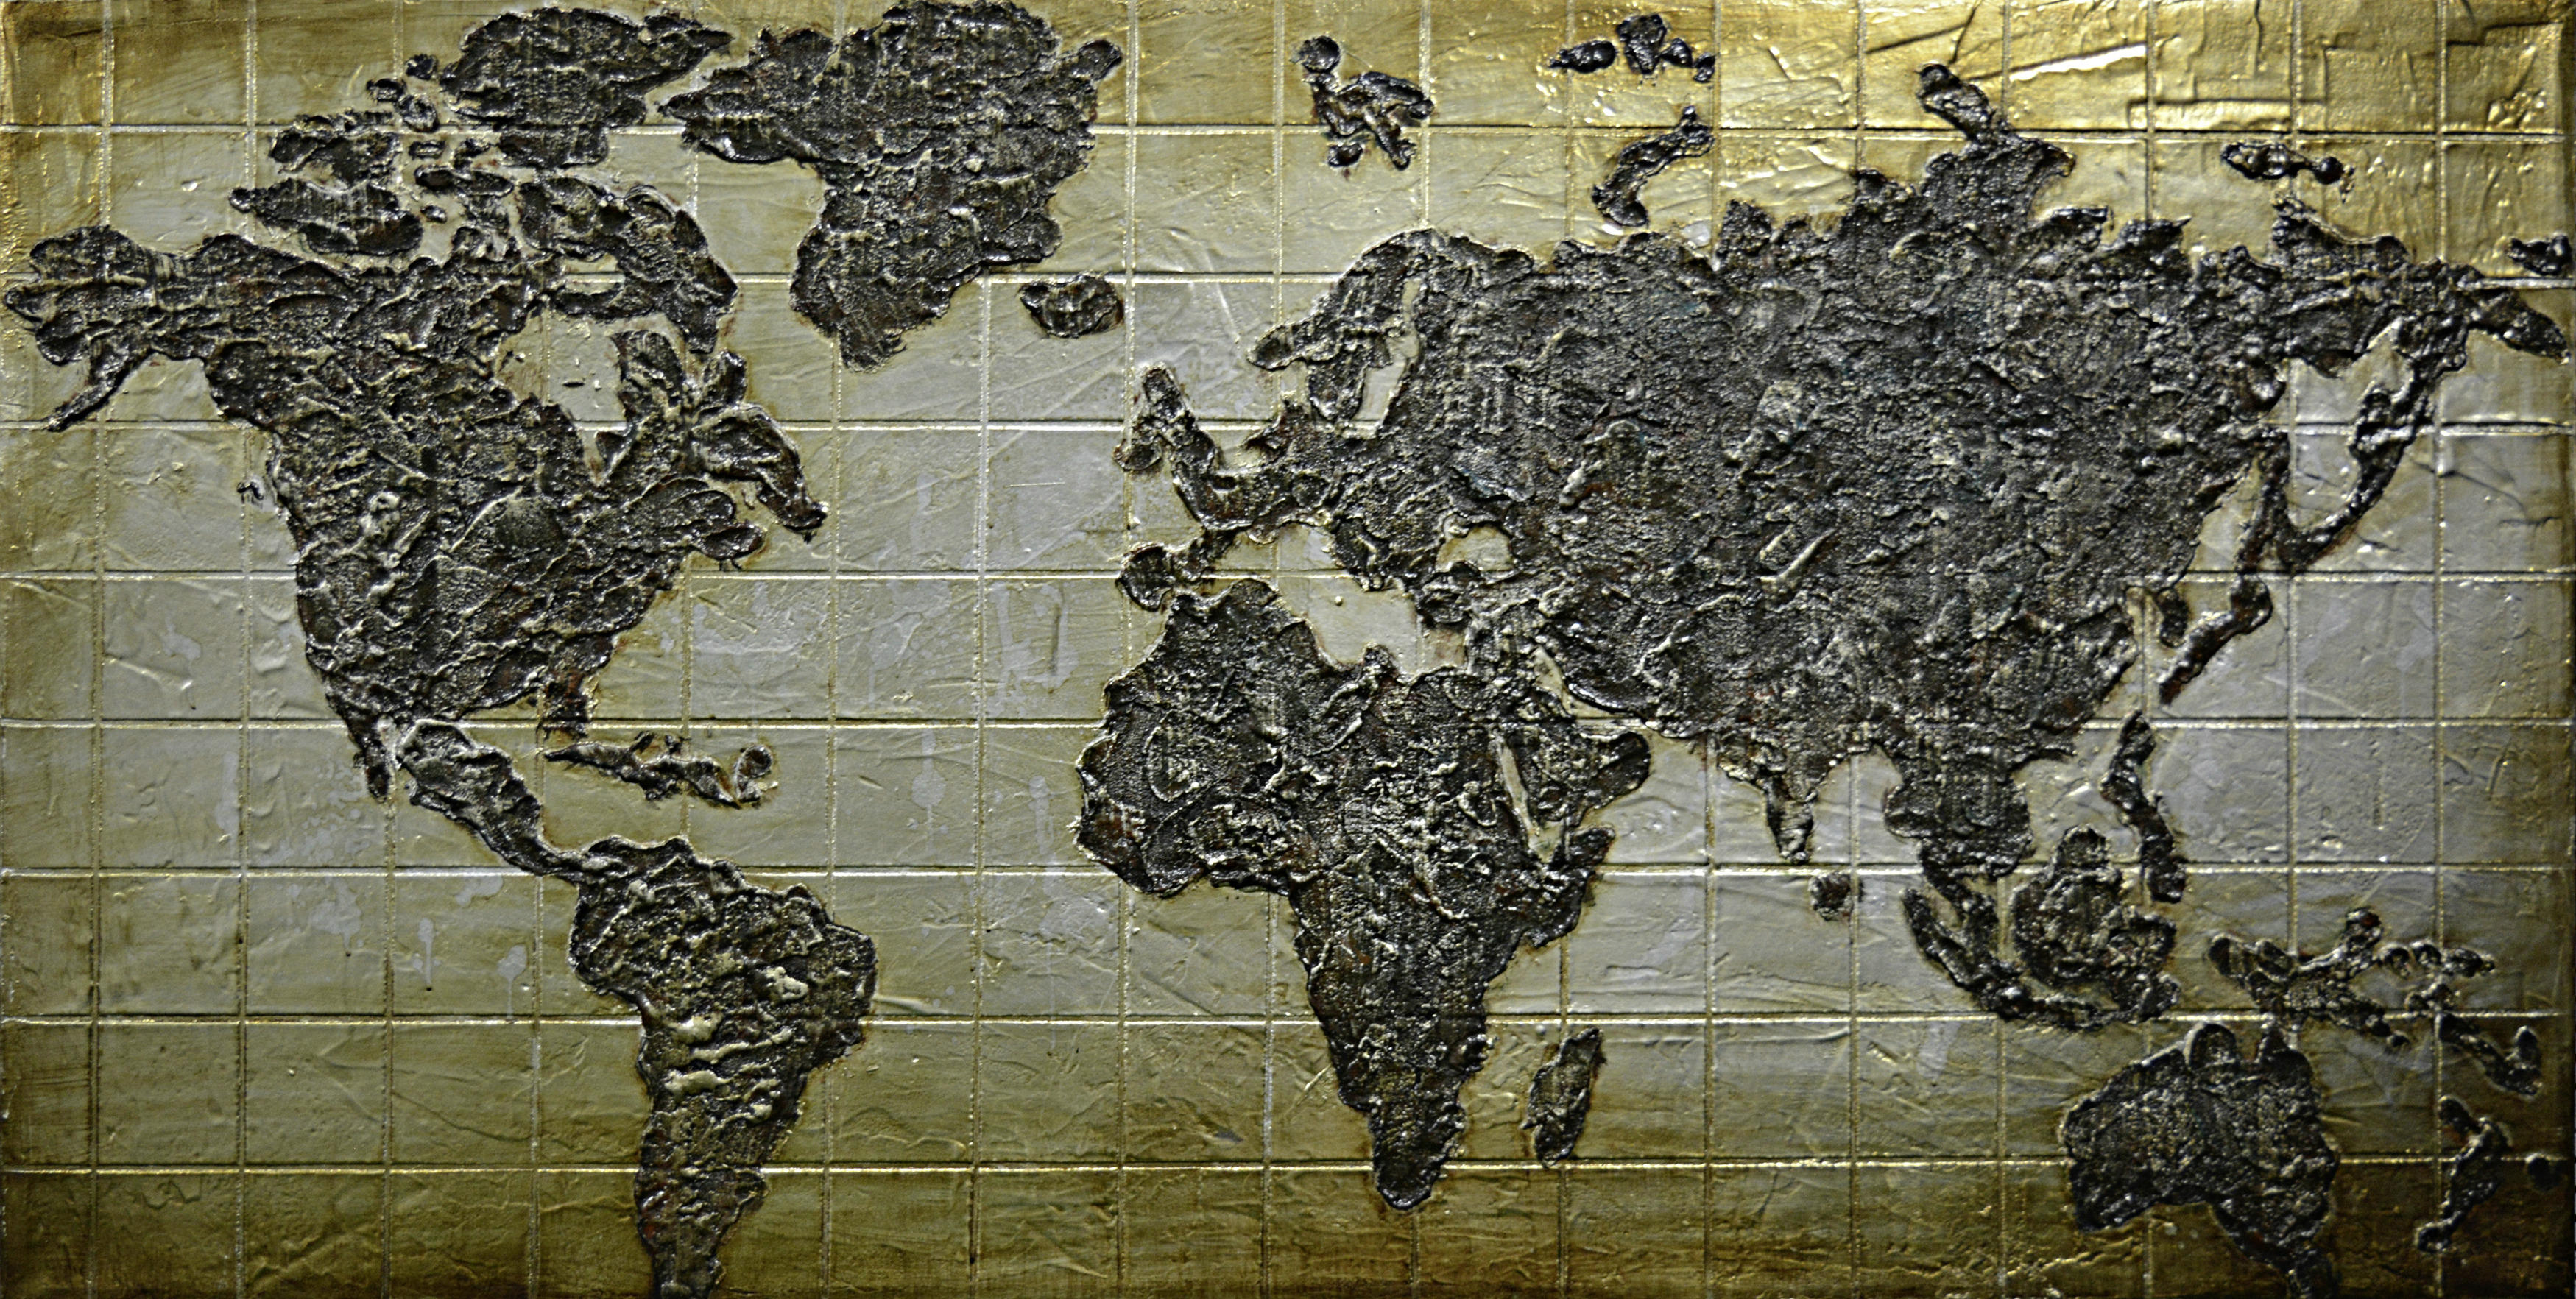 OLEJOMAĽBA, mapa sveta, 150/70 cm  - čierna/zlatá, Lifestyle, drevo/textil (150/70cm) - Monee